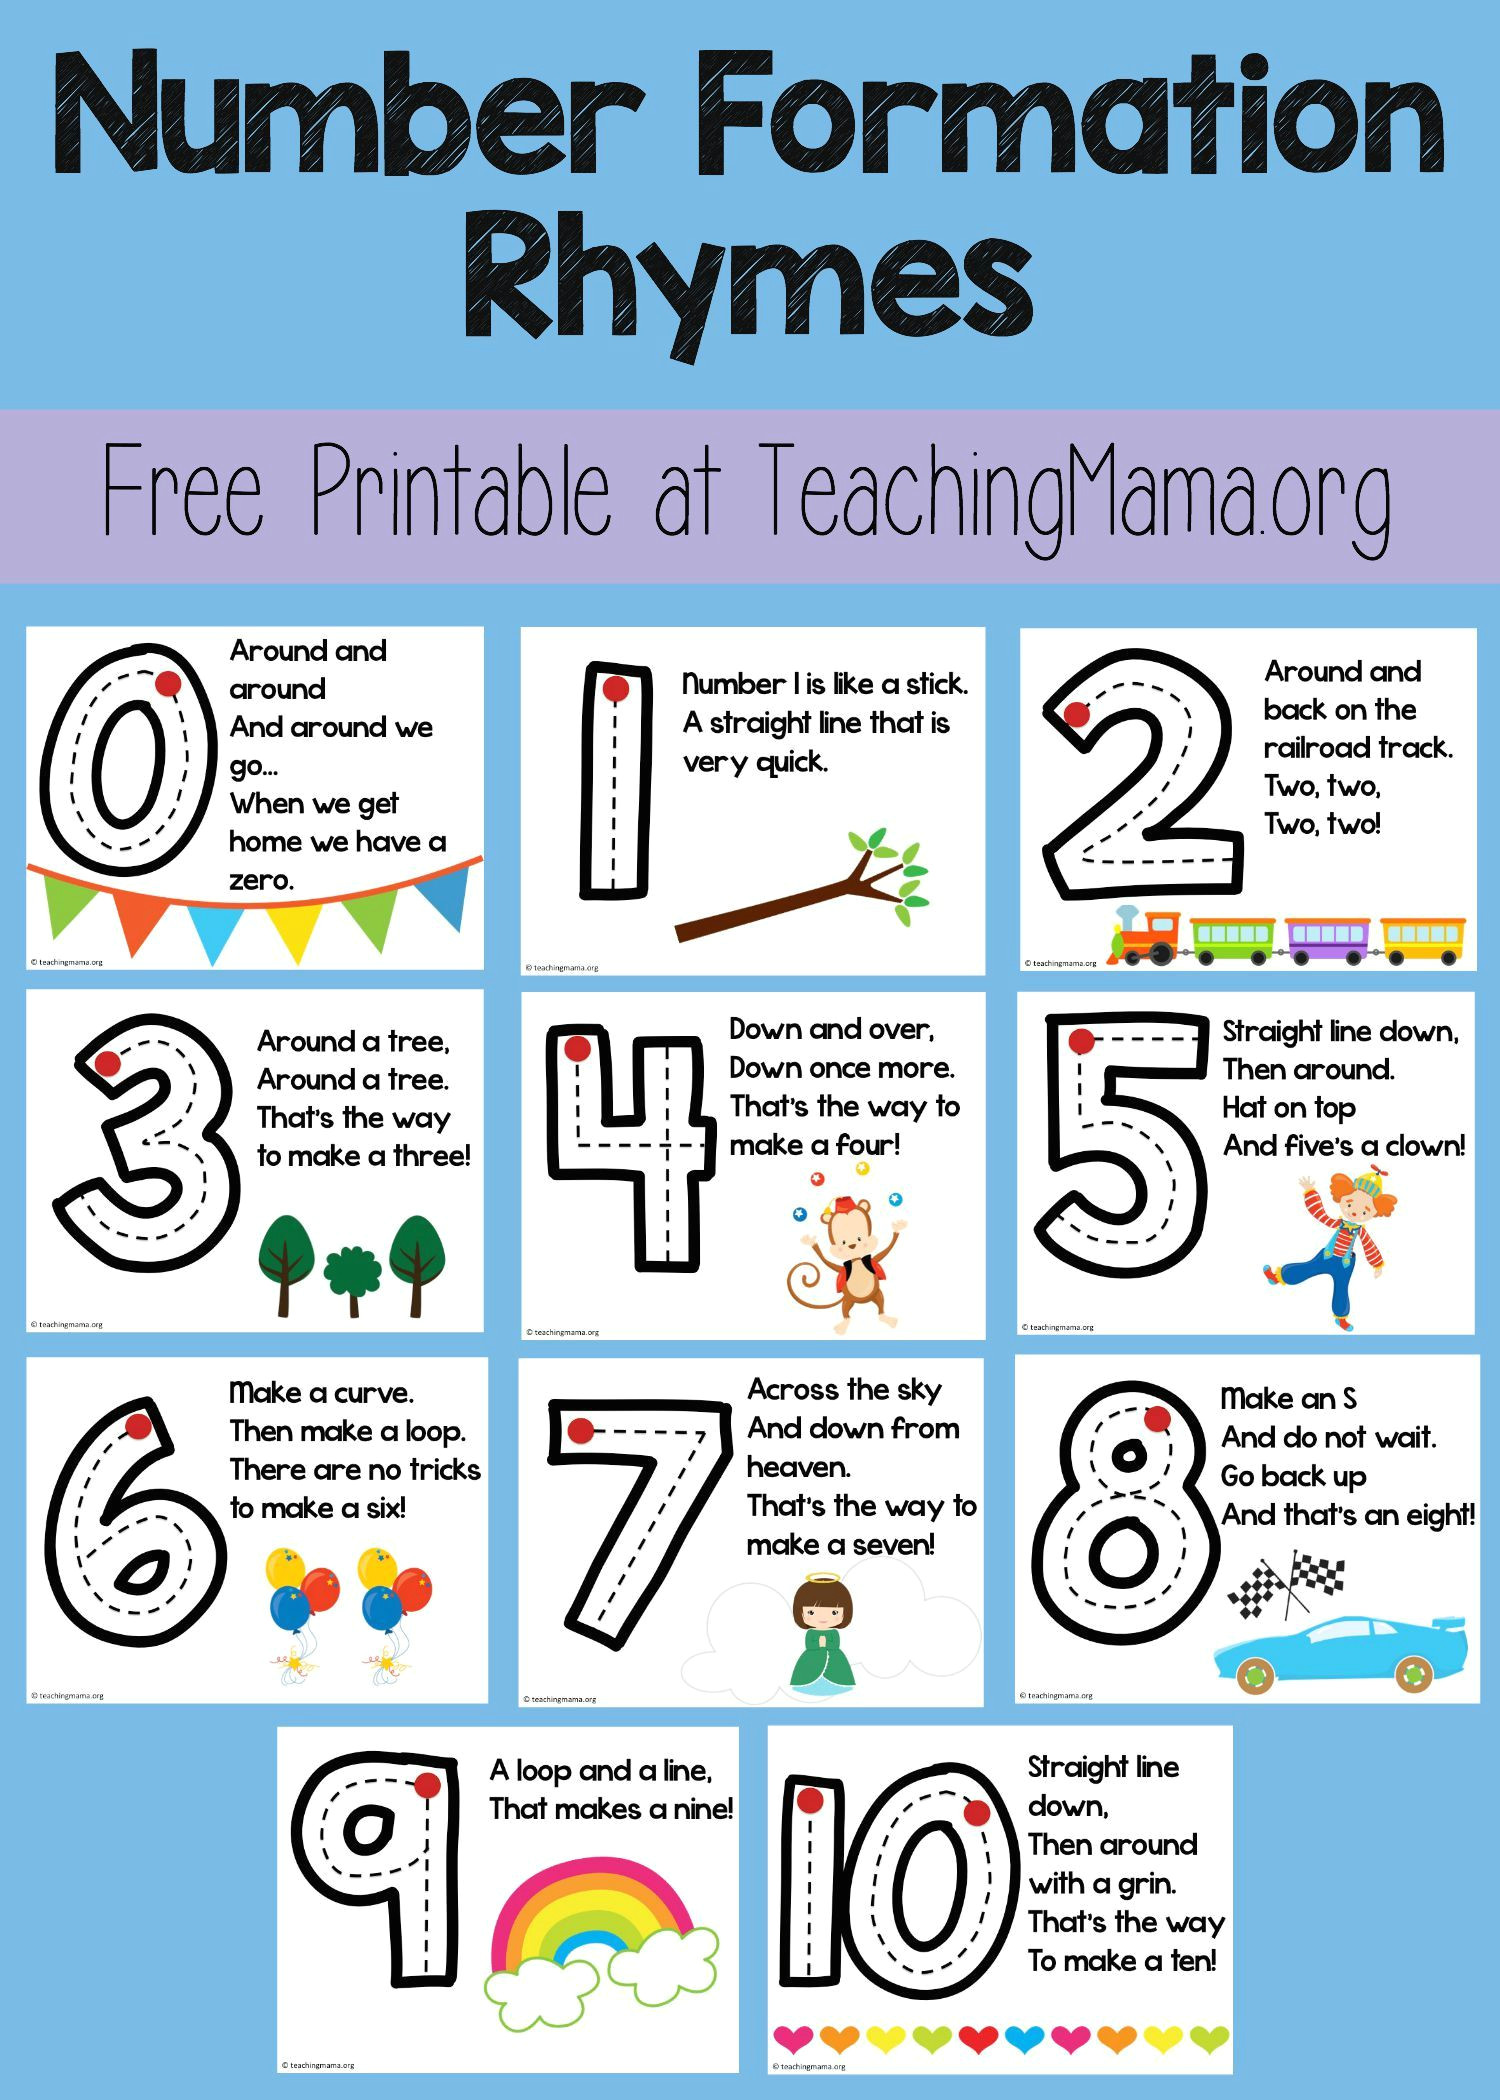 Drawing Things with Numbers Number formation Rhymes Teaching Kindergarten Teaching